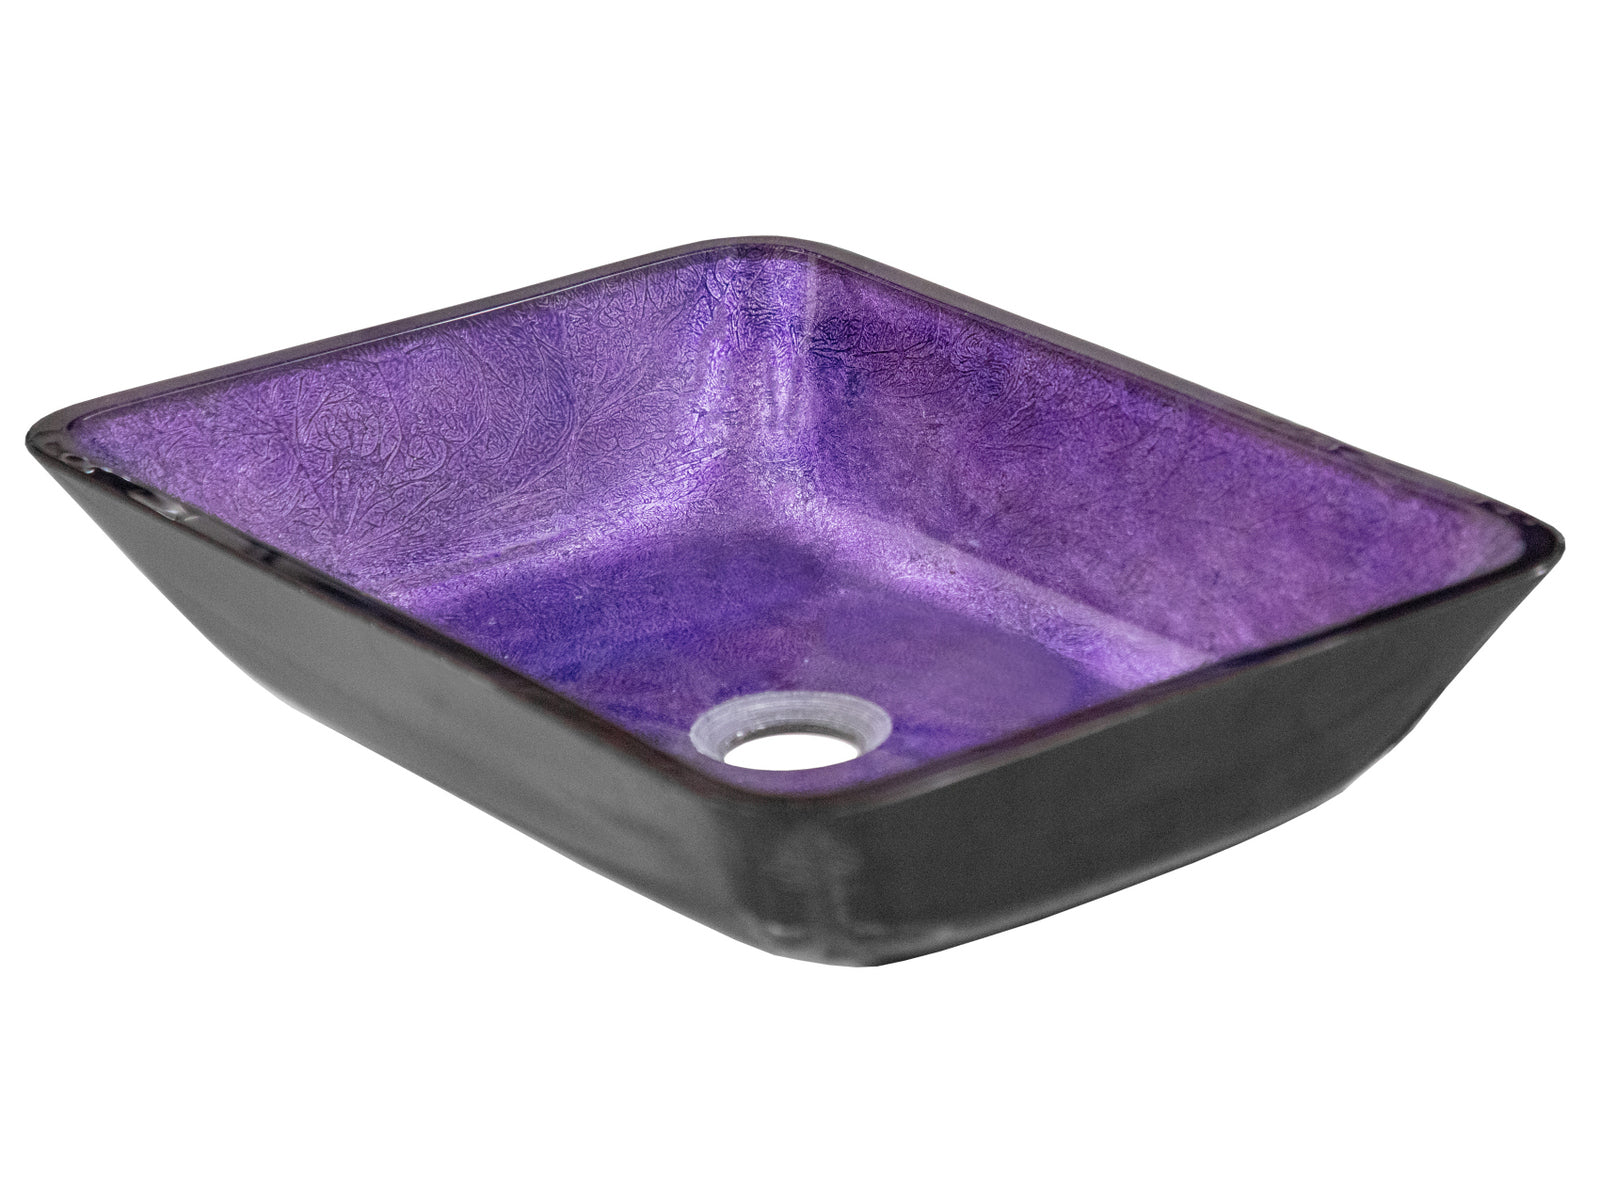 Eden Bath Rectangular Purple Foil Glass Vessel Sink with Black Exterior